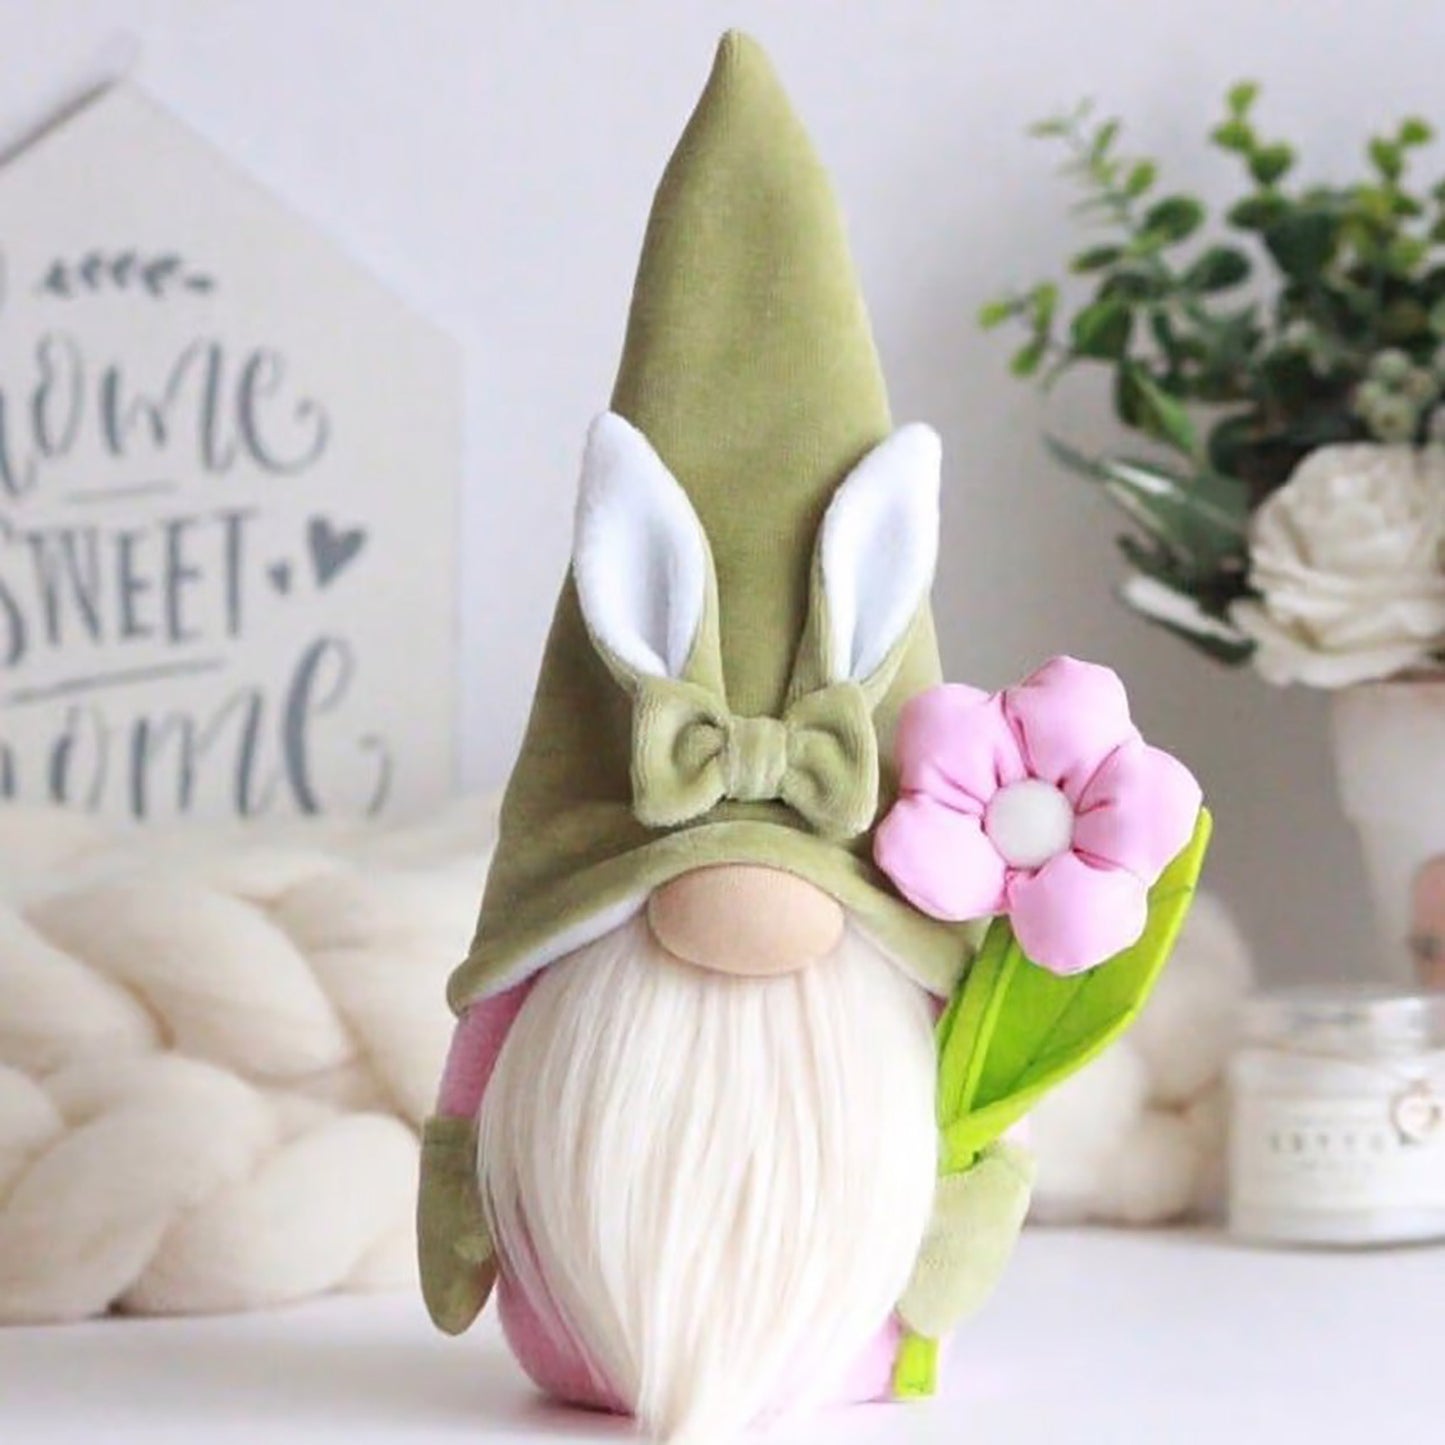 Bunny Flower Gnome